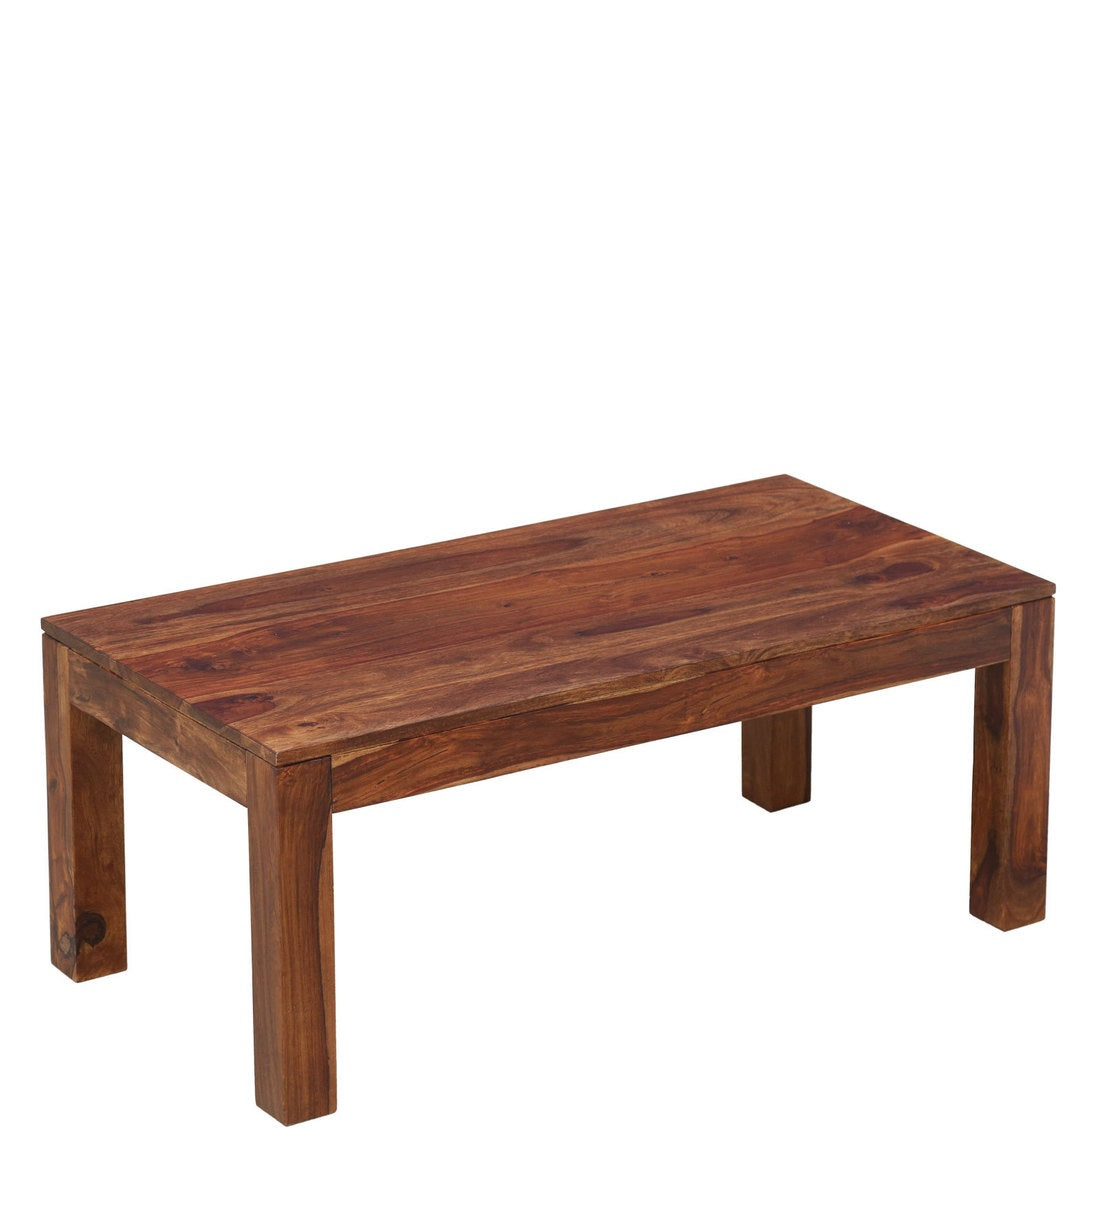 Laca Sheesham Wood Coffee Table For Living Room Finish - Rajwada Furnish